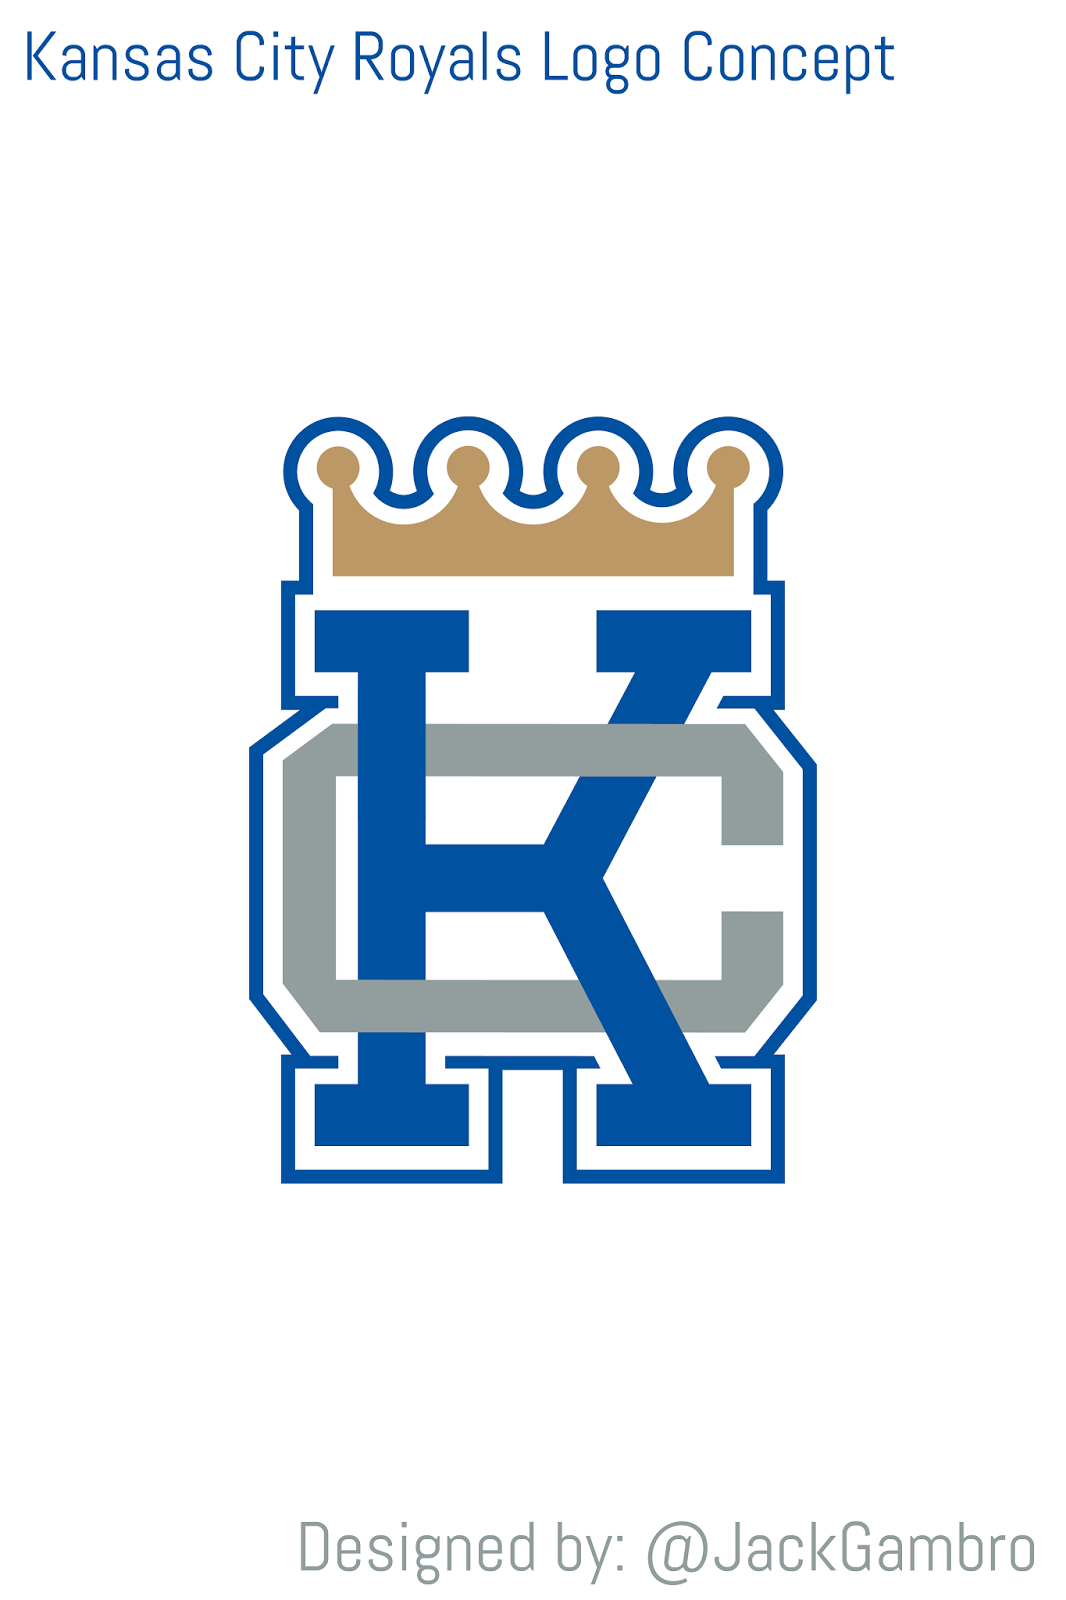 Kansas City Royals Concept Uniforms - Concepts - Chris Creamer's Sports  Logos Community - CCSLC - SportsLogos.Net Forums